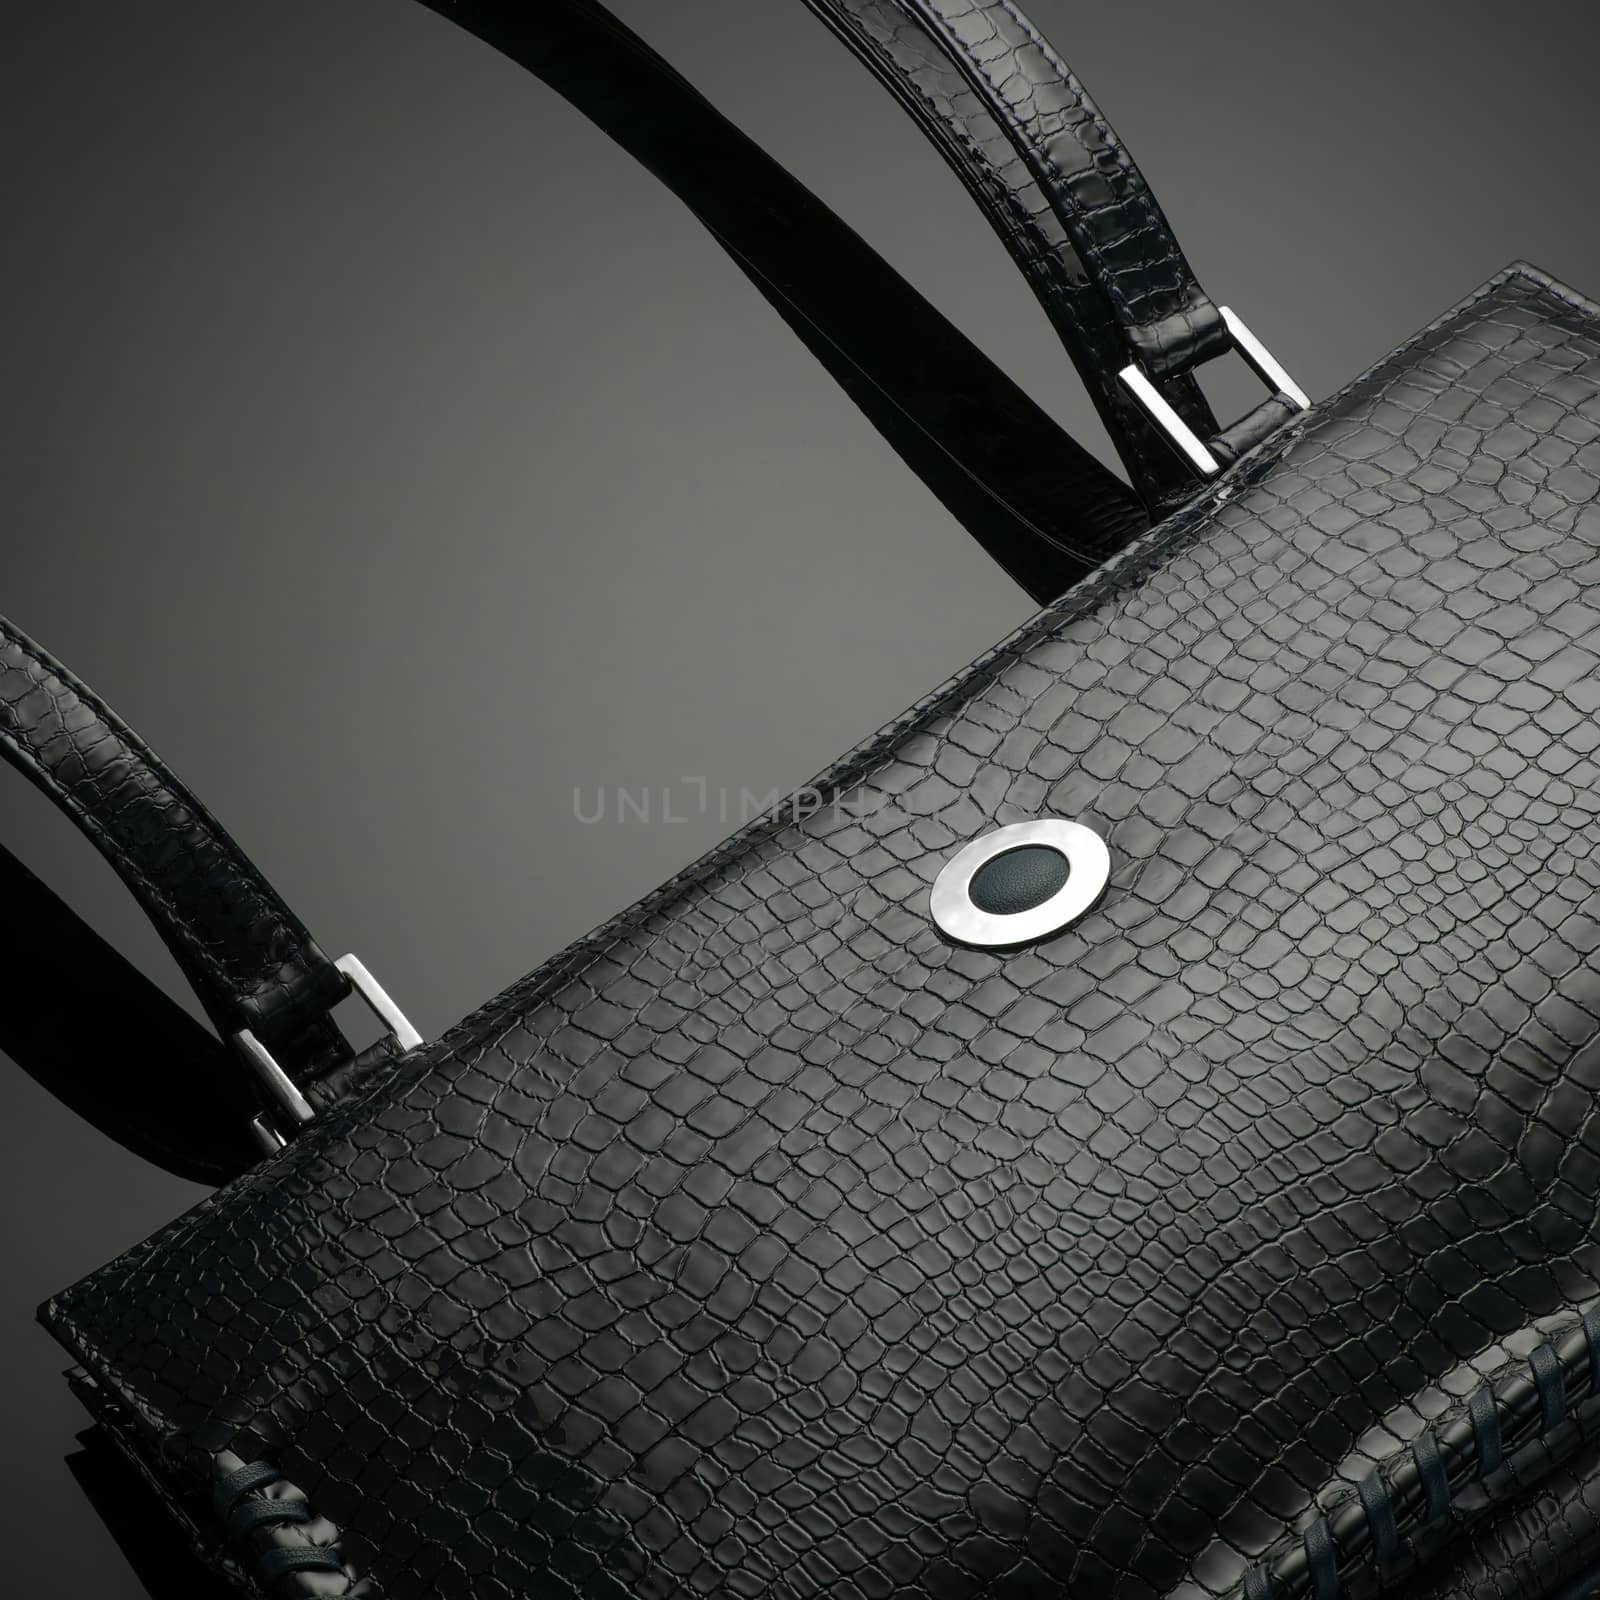 Black fashionable designer women's bag on a dark background